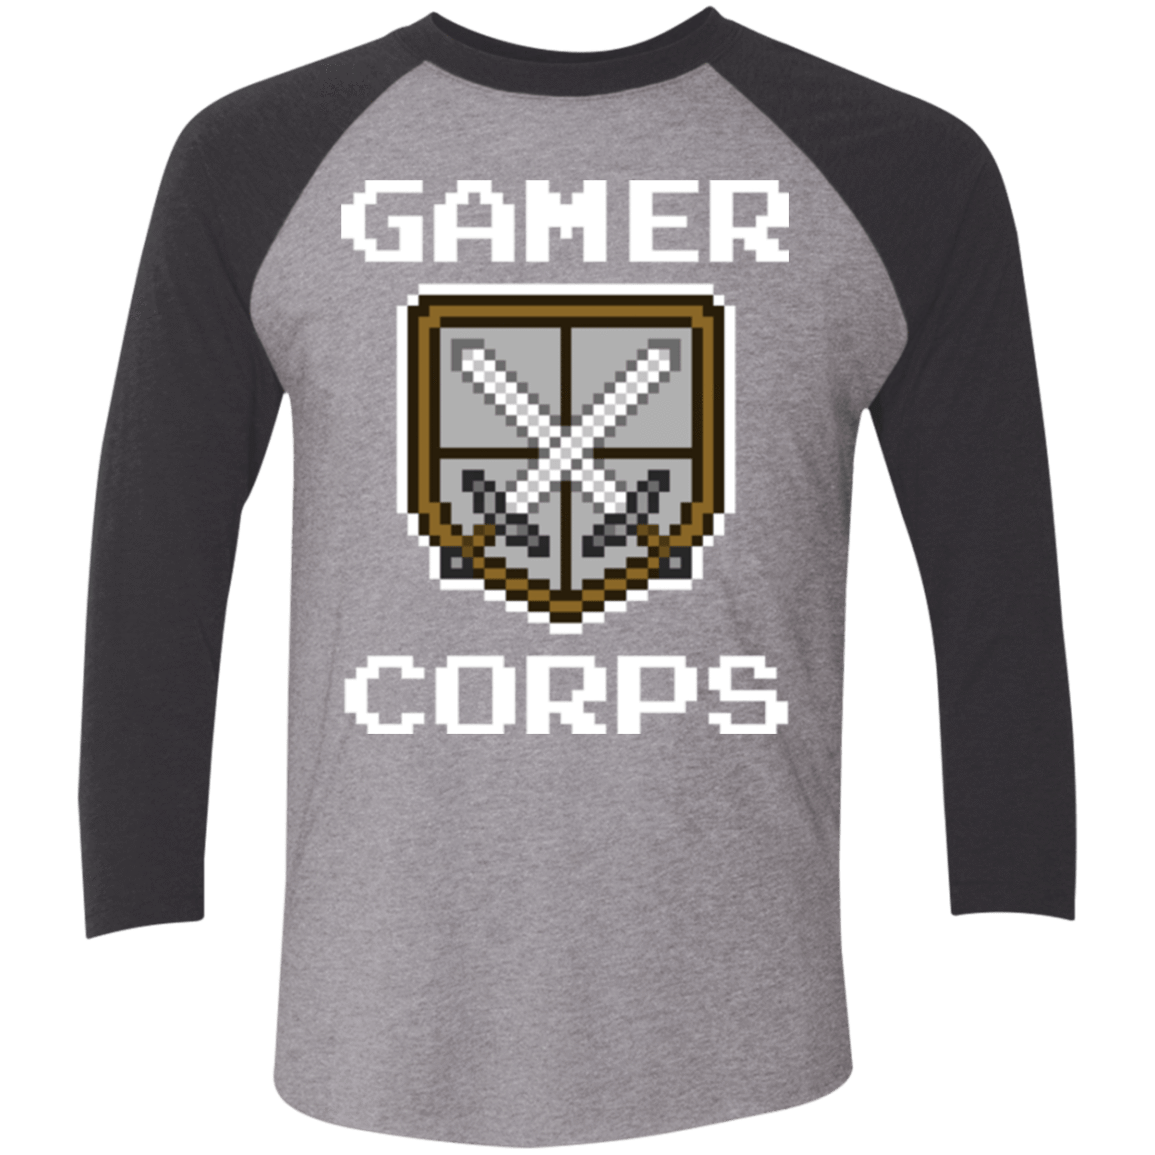 T-Shirts Premium Heather/ Vintage Black / X-Small Gamer corps Men's Triblend 3/4 Sleeve